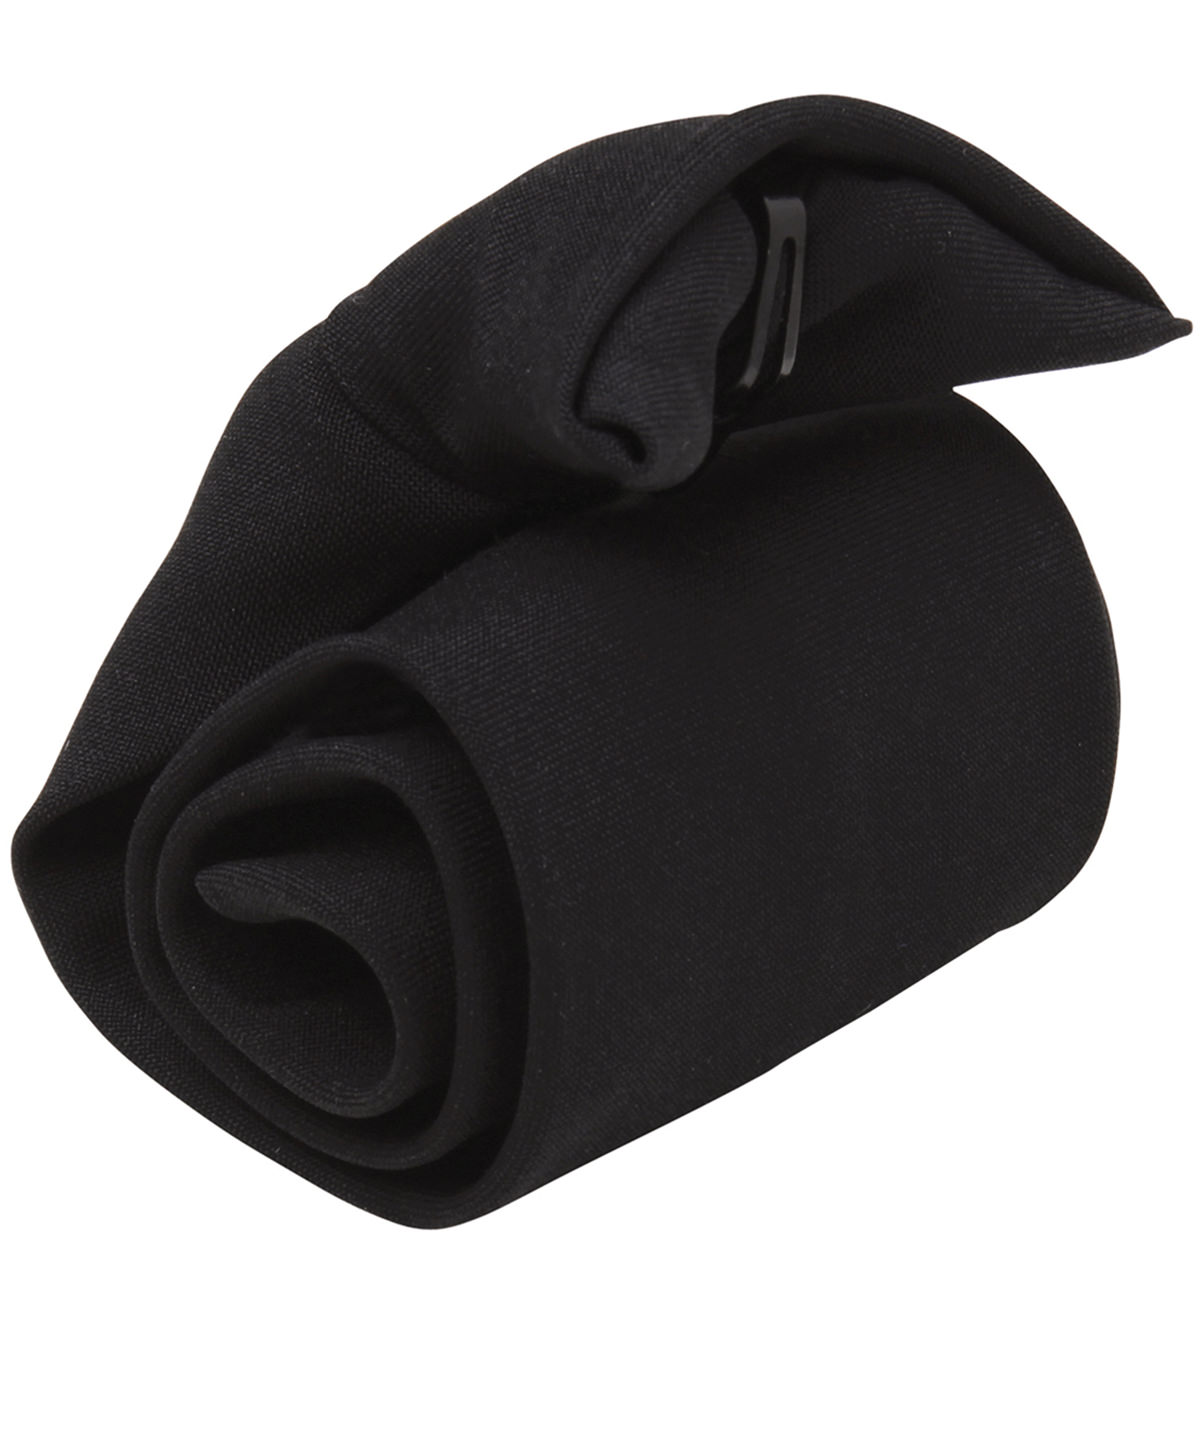 Clip Tie Black Size One Size